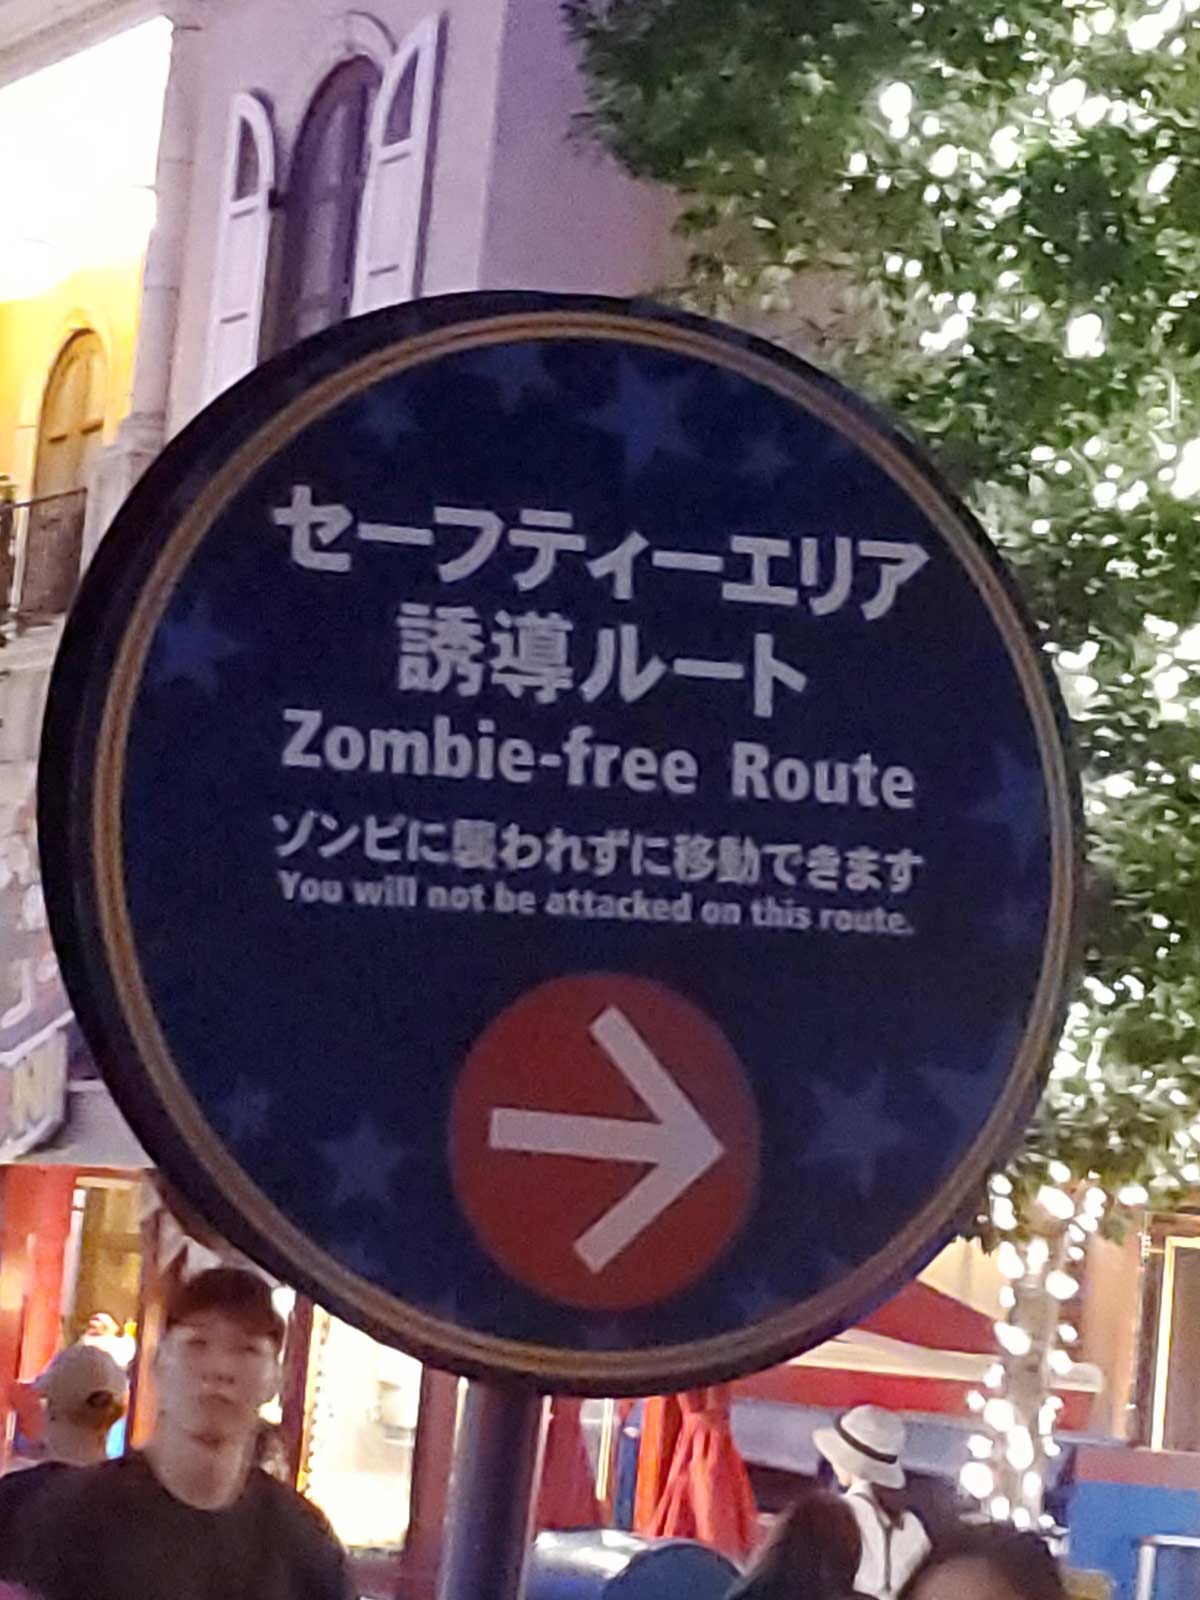 Zombie-free route